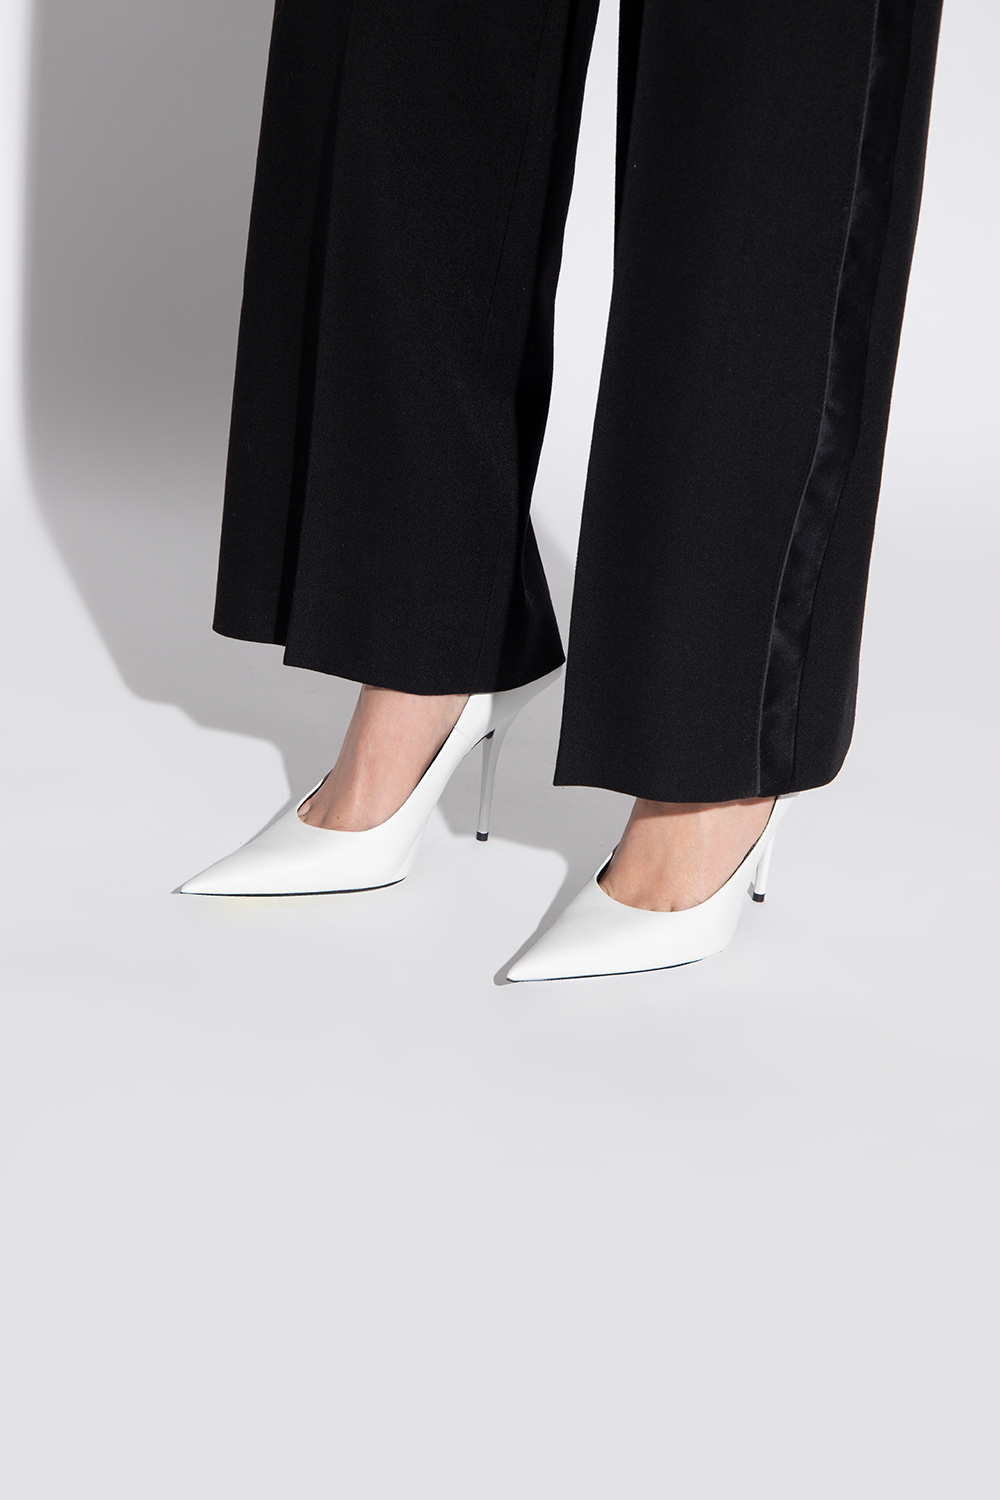 Balenciaga ‘Essex’ pumps | Women's Shoes | Vitkac